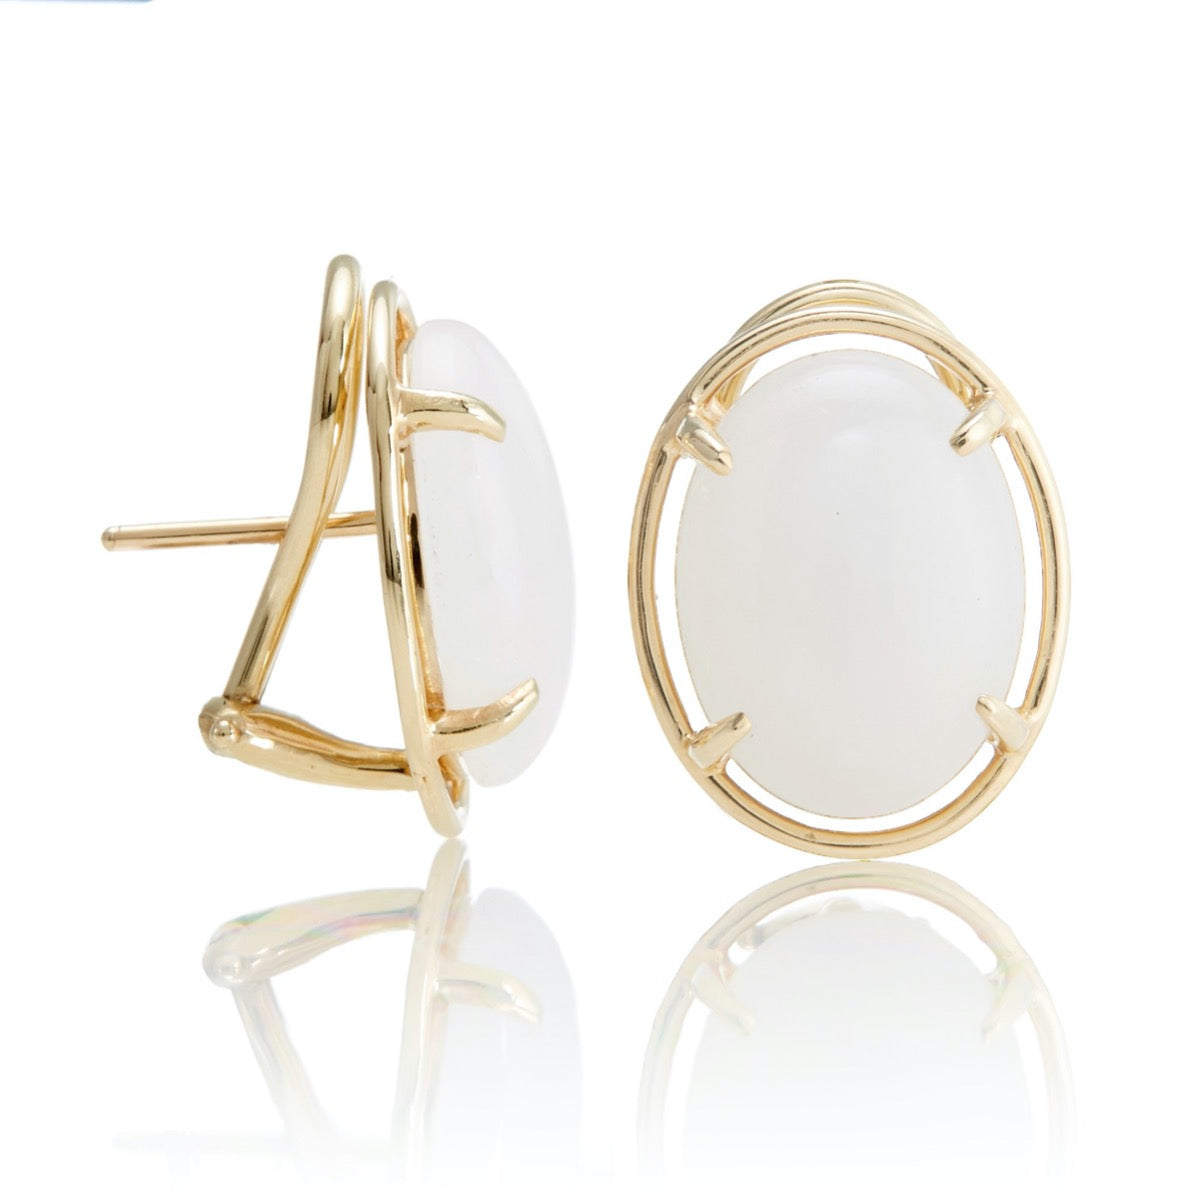 Peninsula Earrings in White Jade